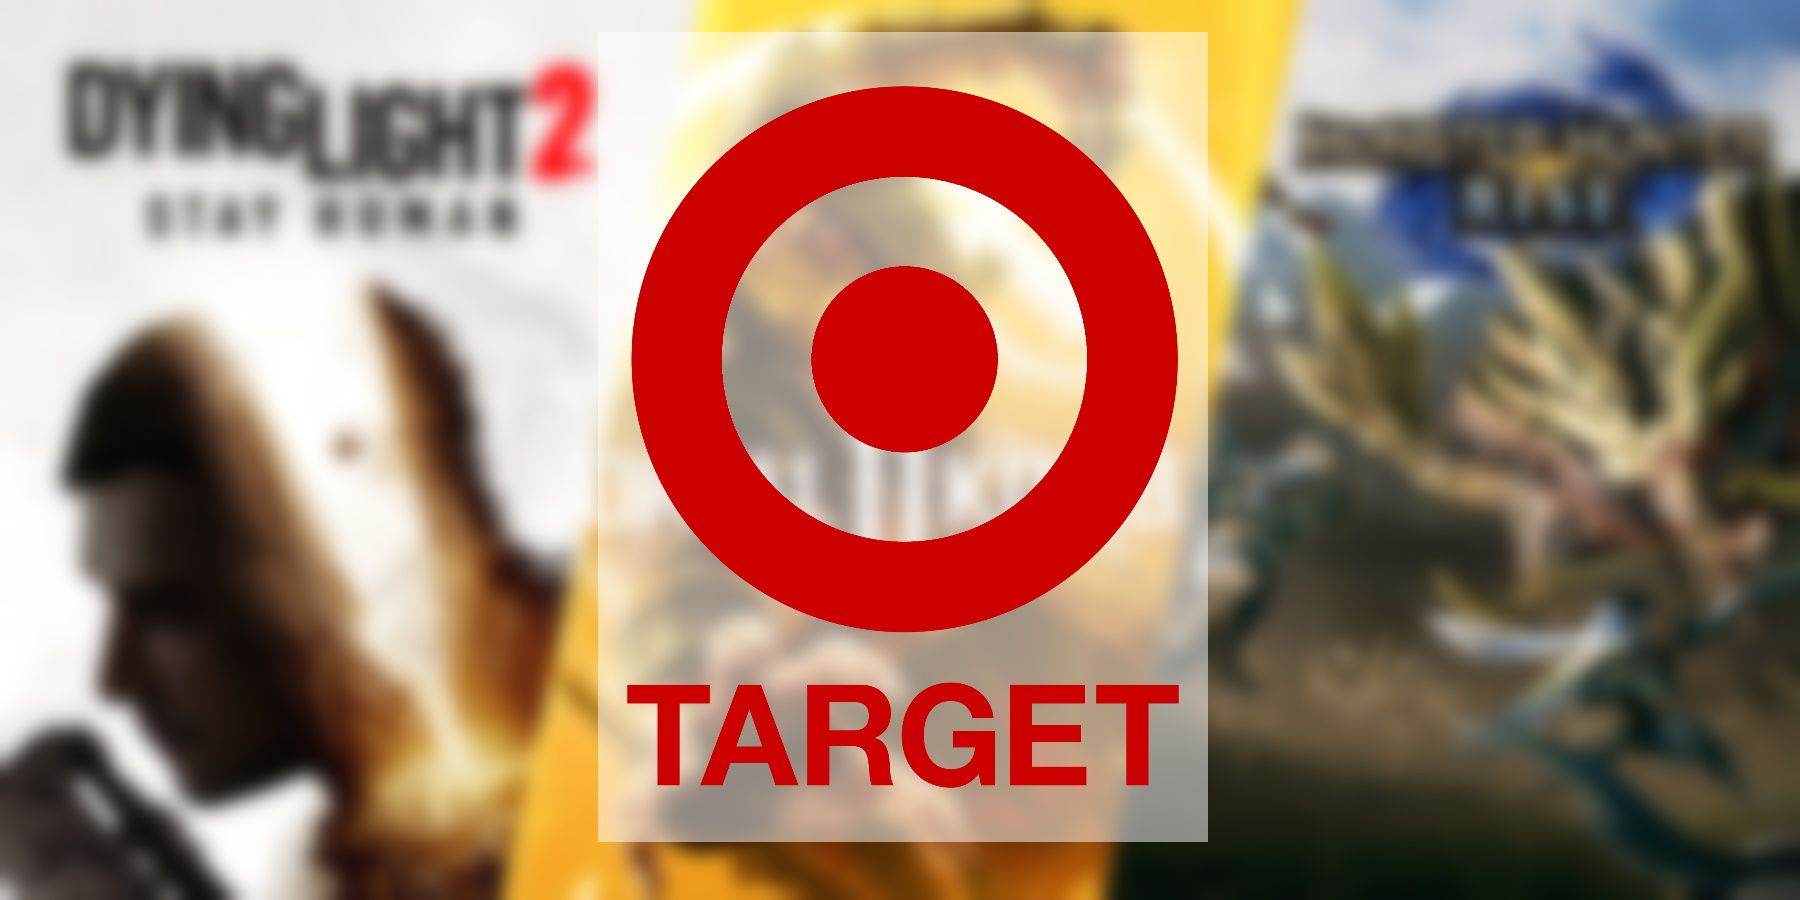 Target Running Compre 2 Obtenga 1 trato gratis para videojuegos